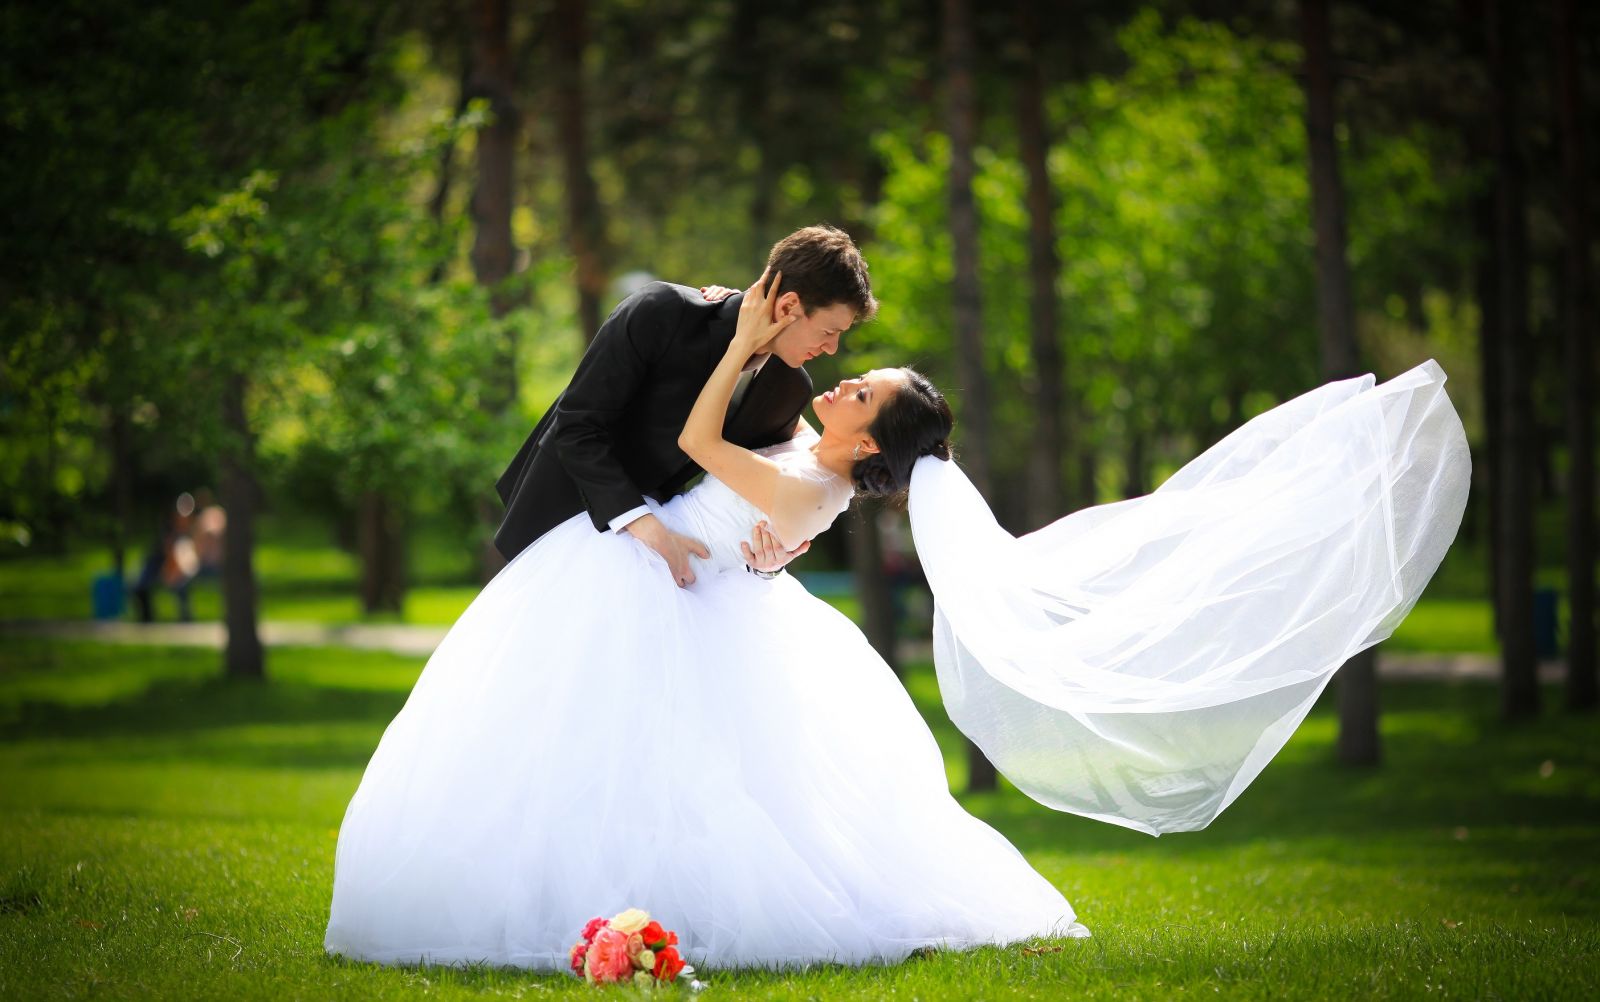 WEDDING CUSTOMS IN KAZAKHSTAN